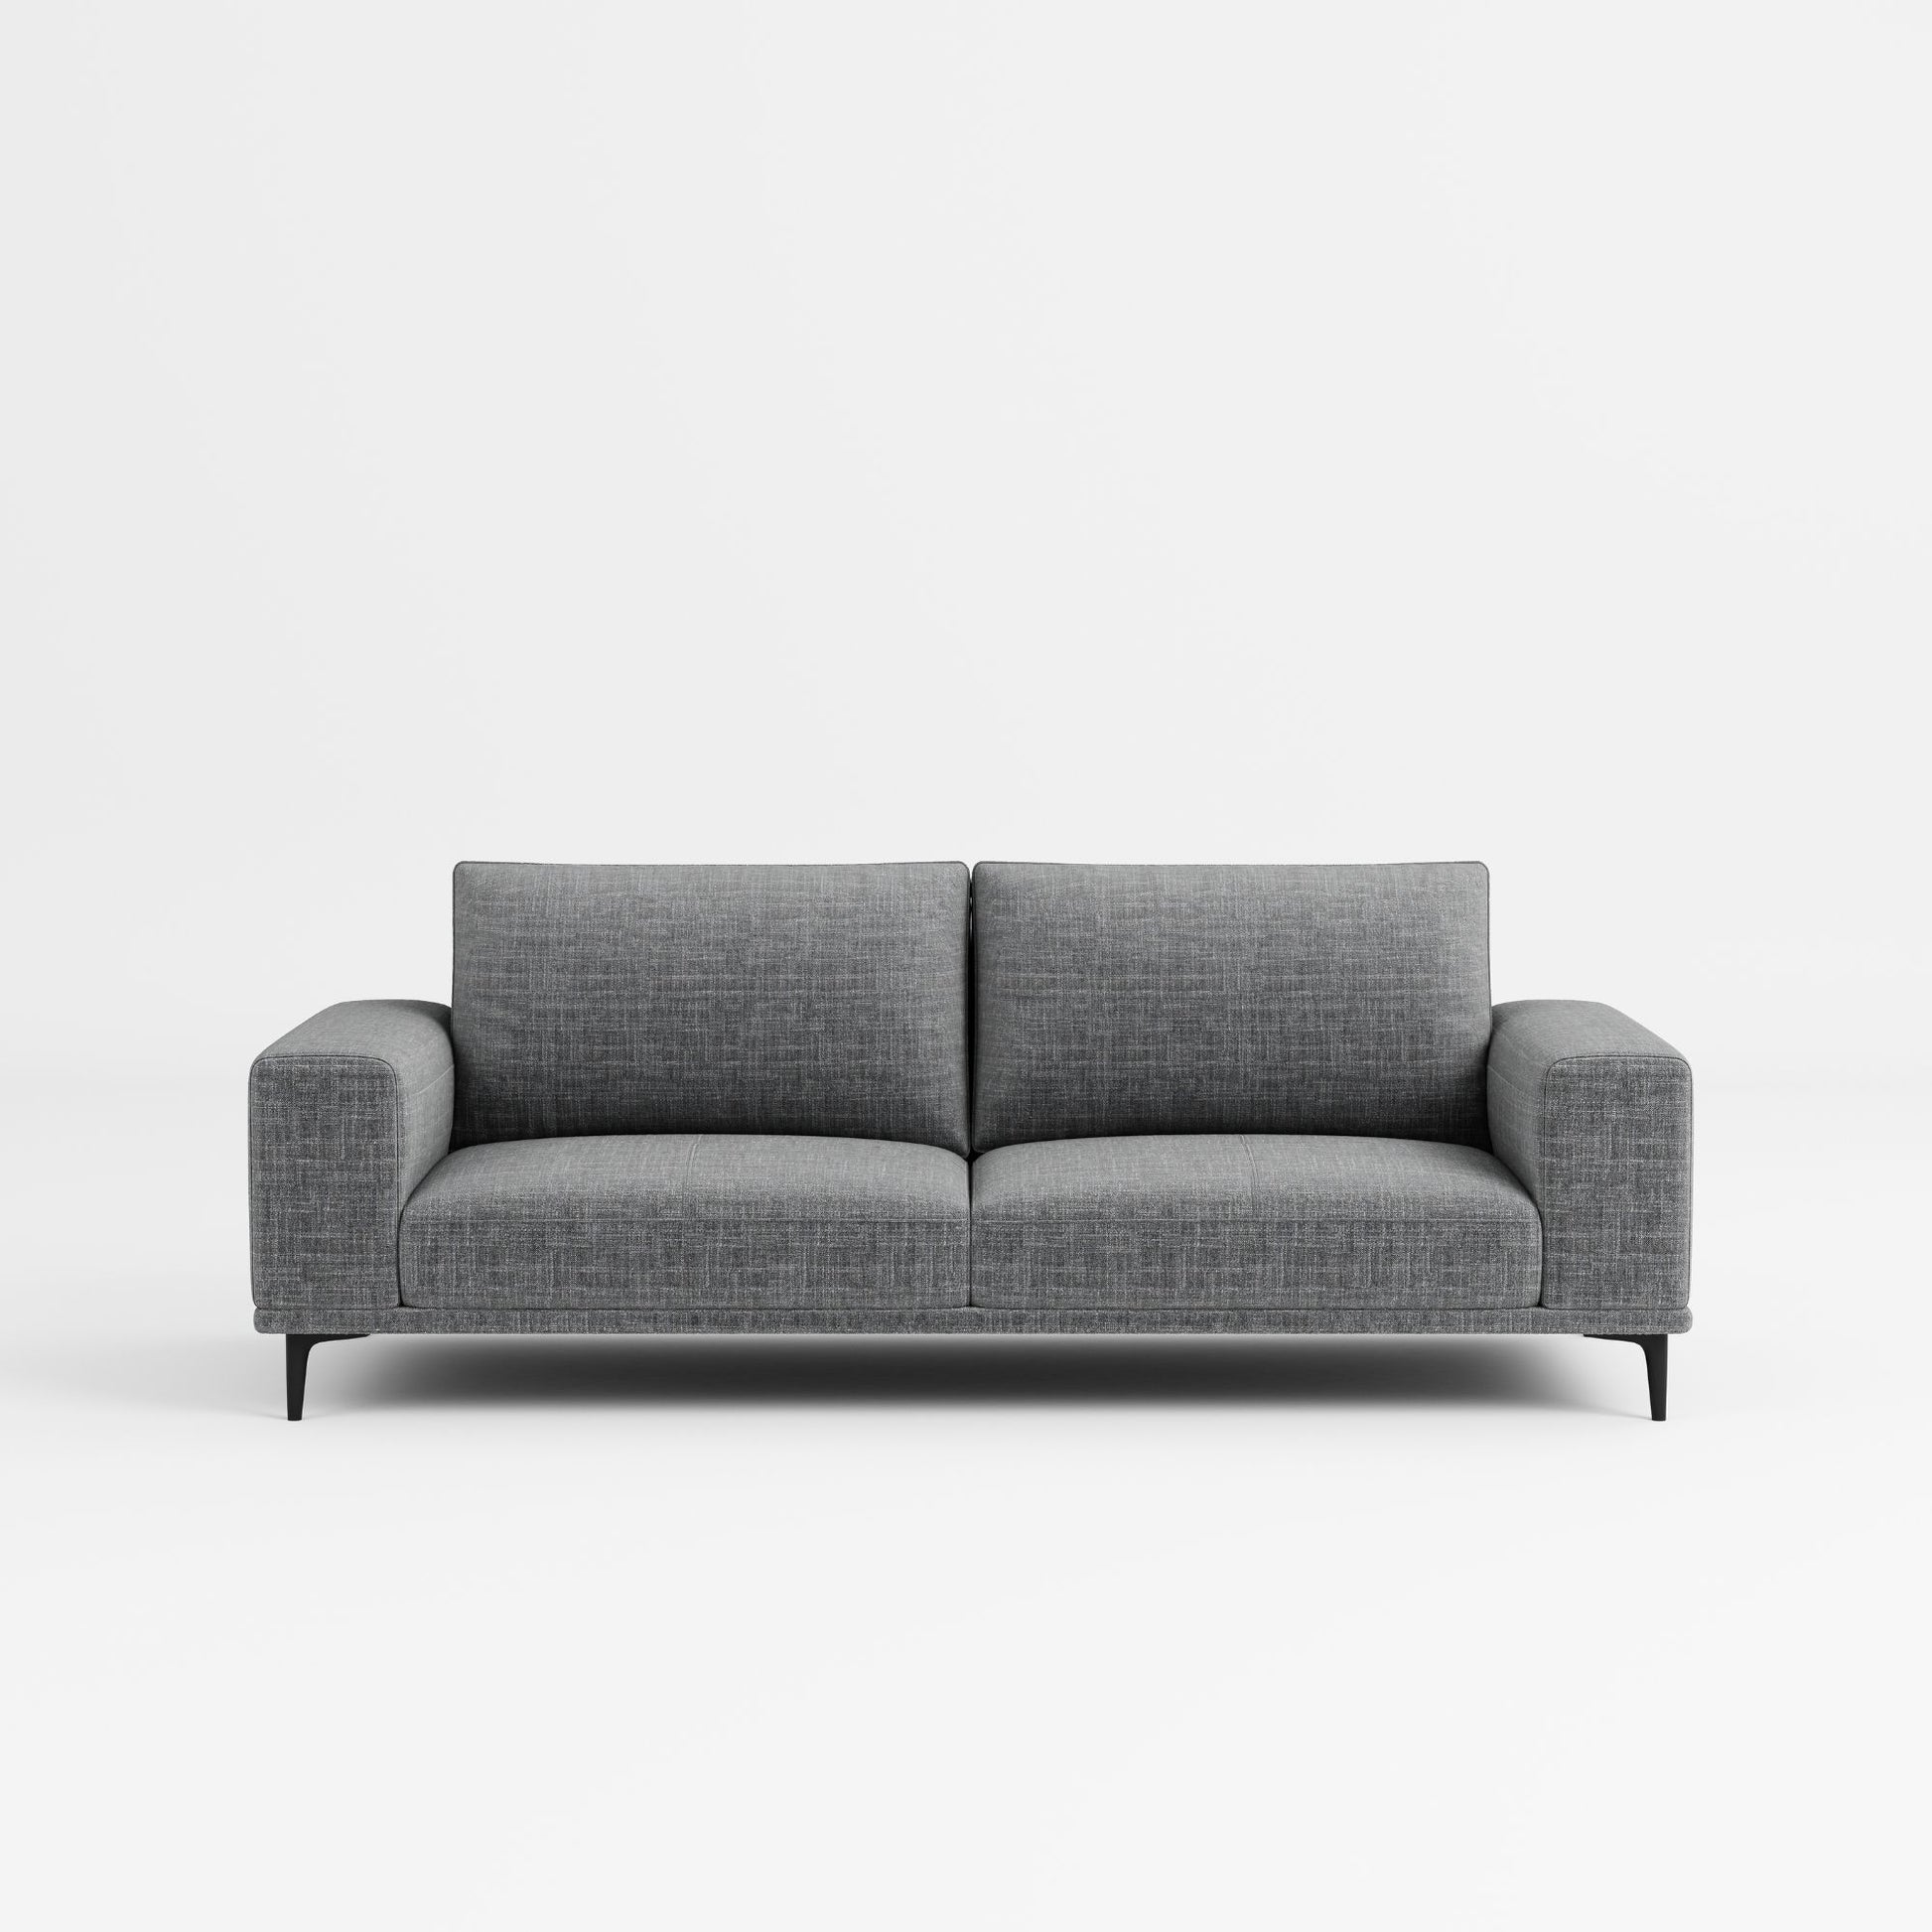 Calm black polyester blend fabric sofa